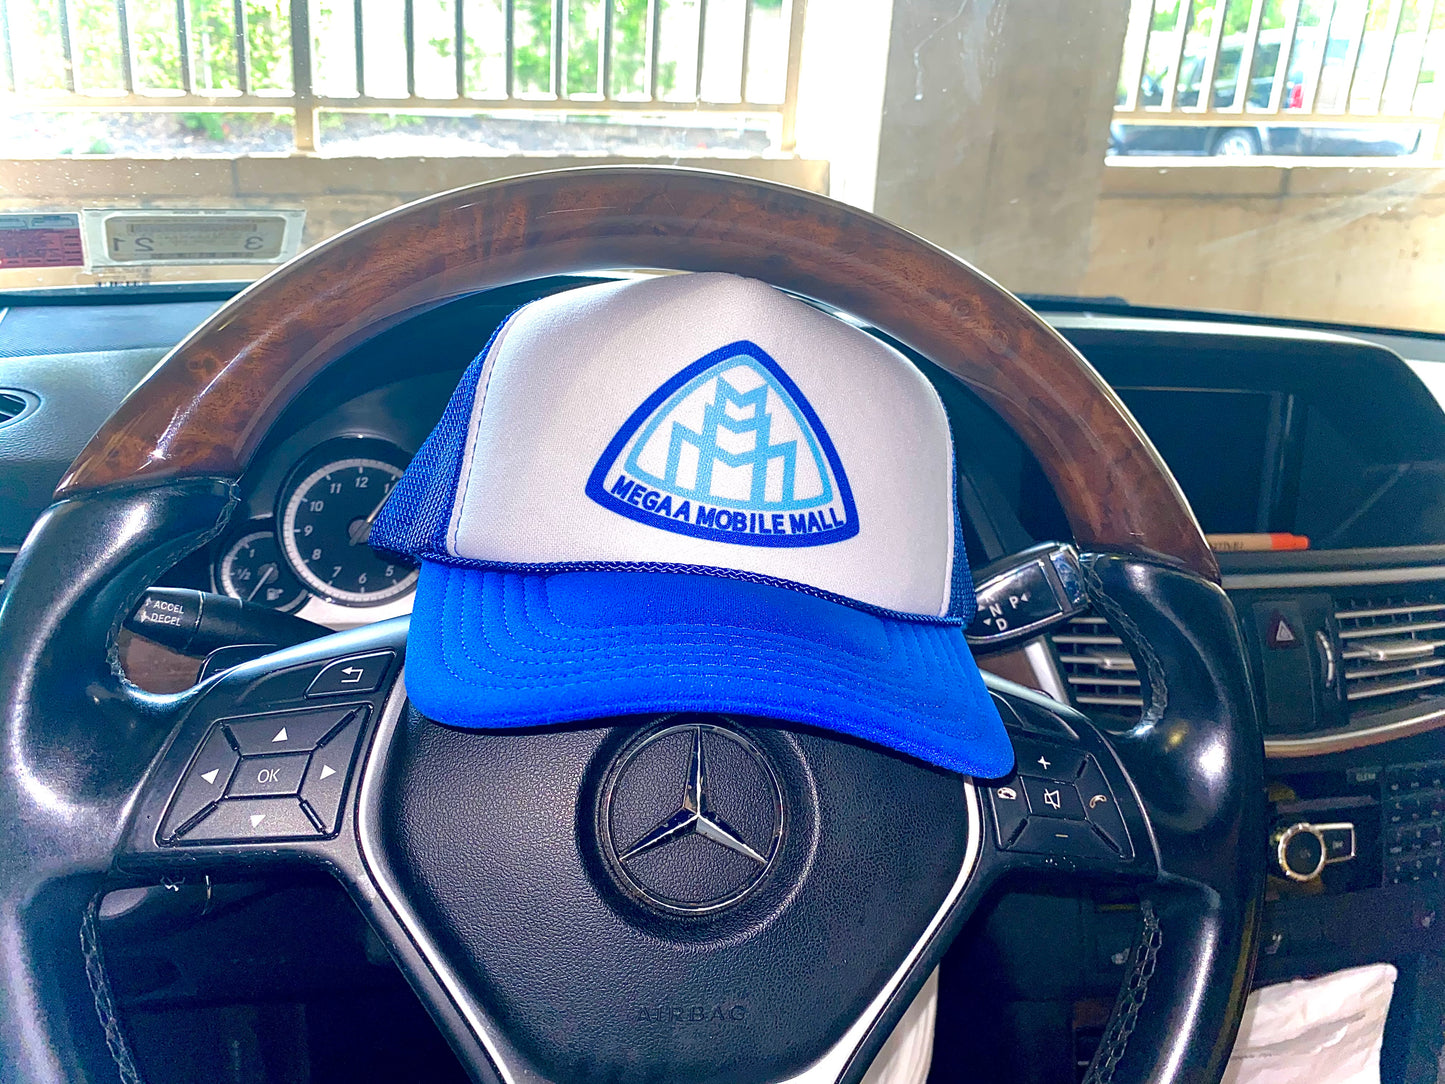 MegaaMobileMall Blue Trucker Hat